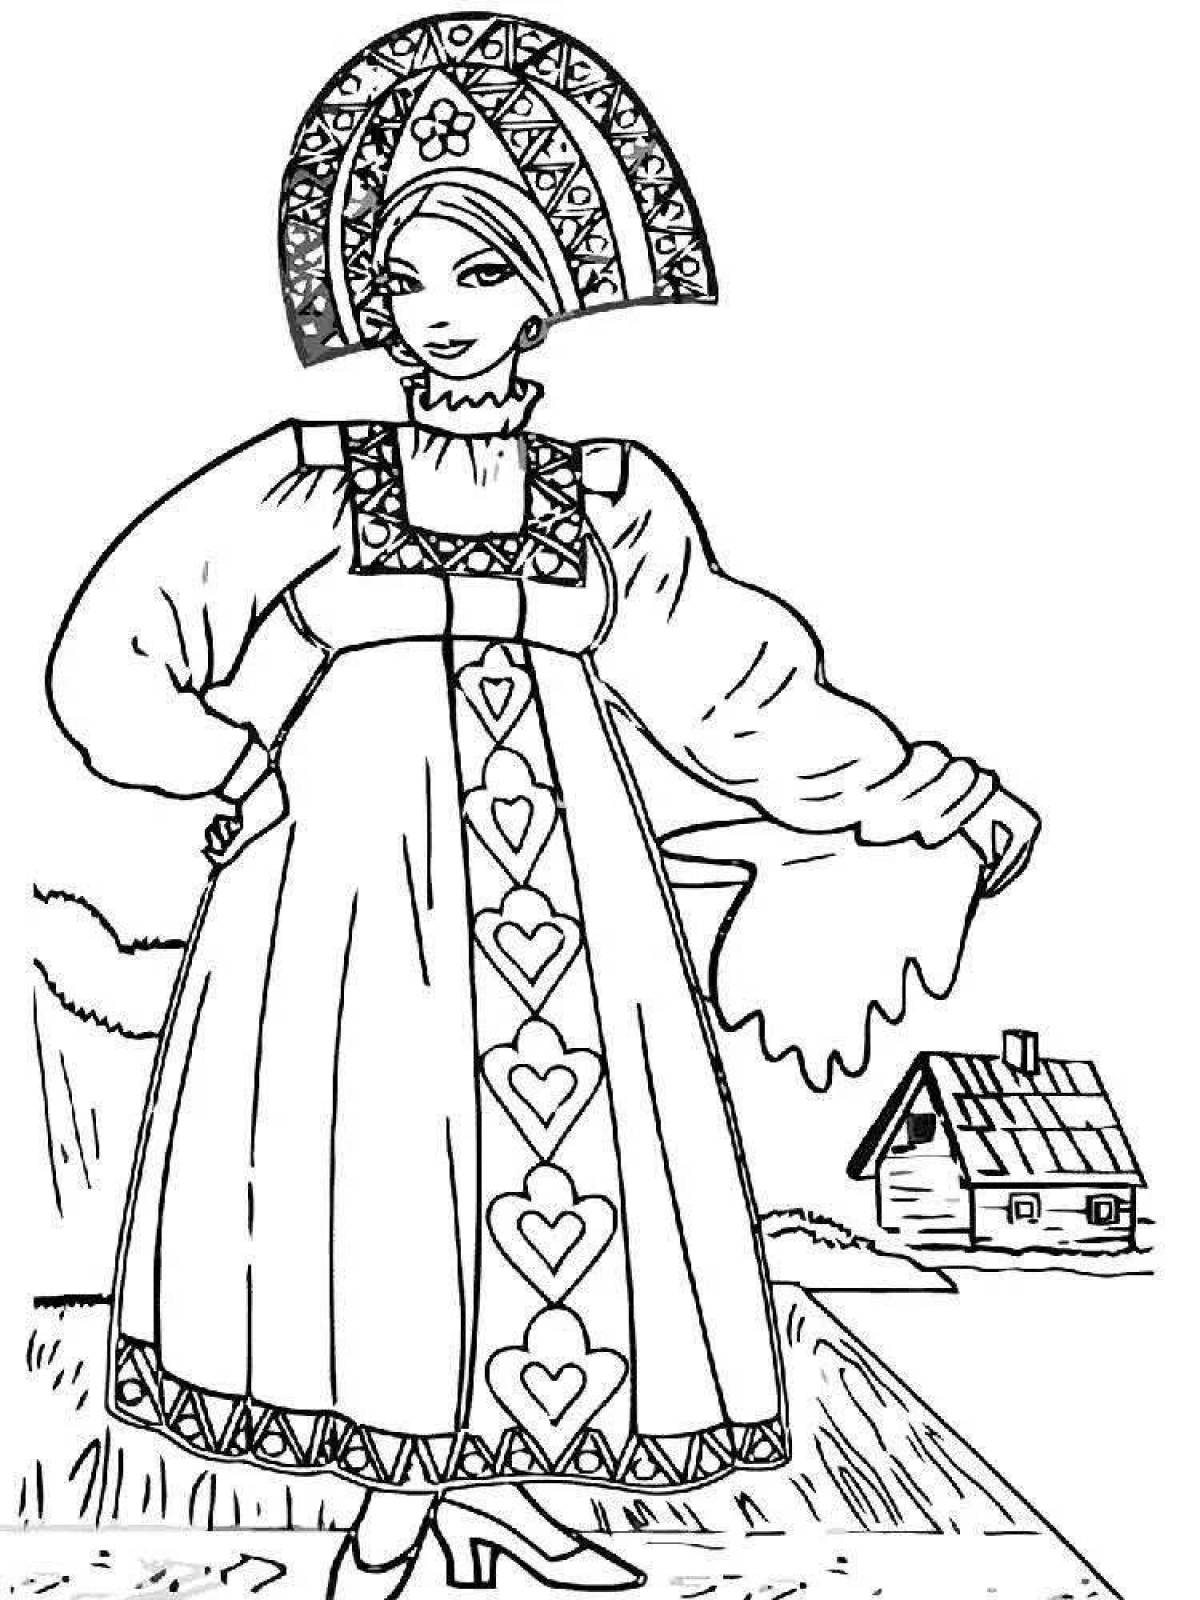 Coloring book shiny Russian costume folk